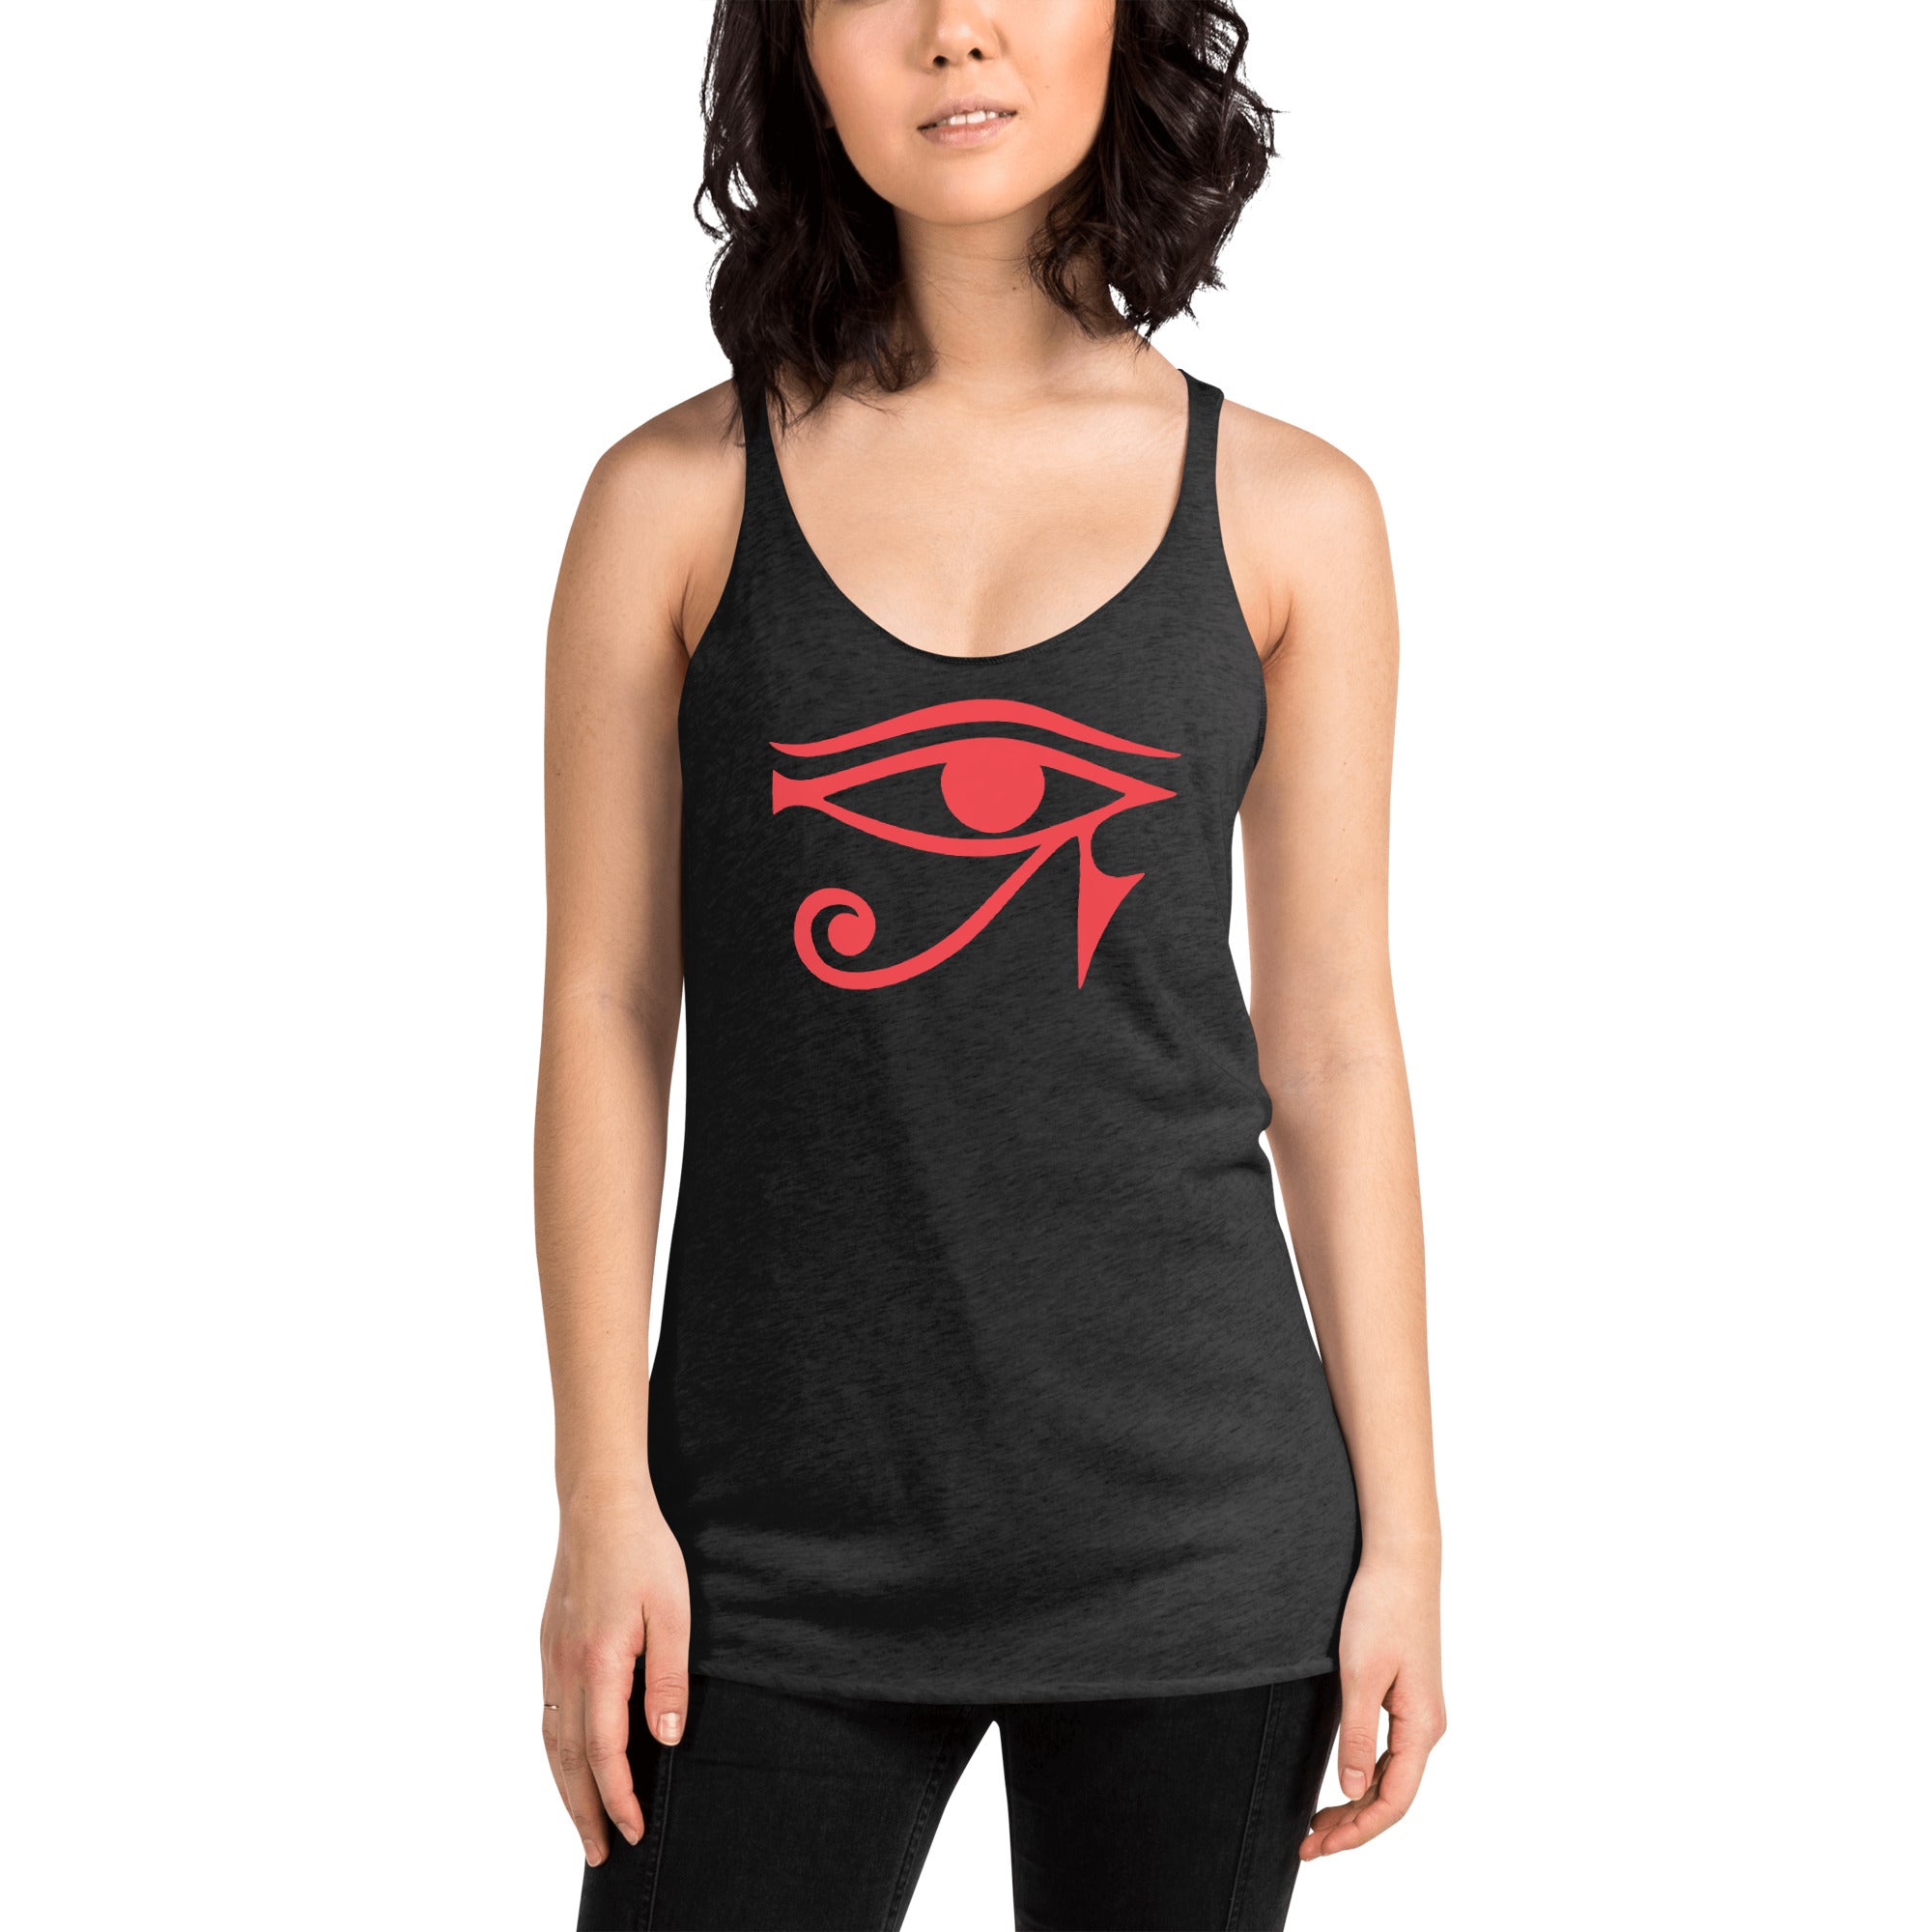 Eye of Ra Egyptian Goddess Women's Racerback Tank Top Shirt Red Print - Edge of Life Designs